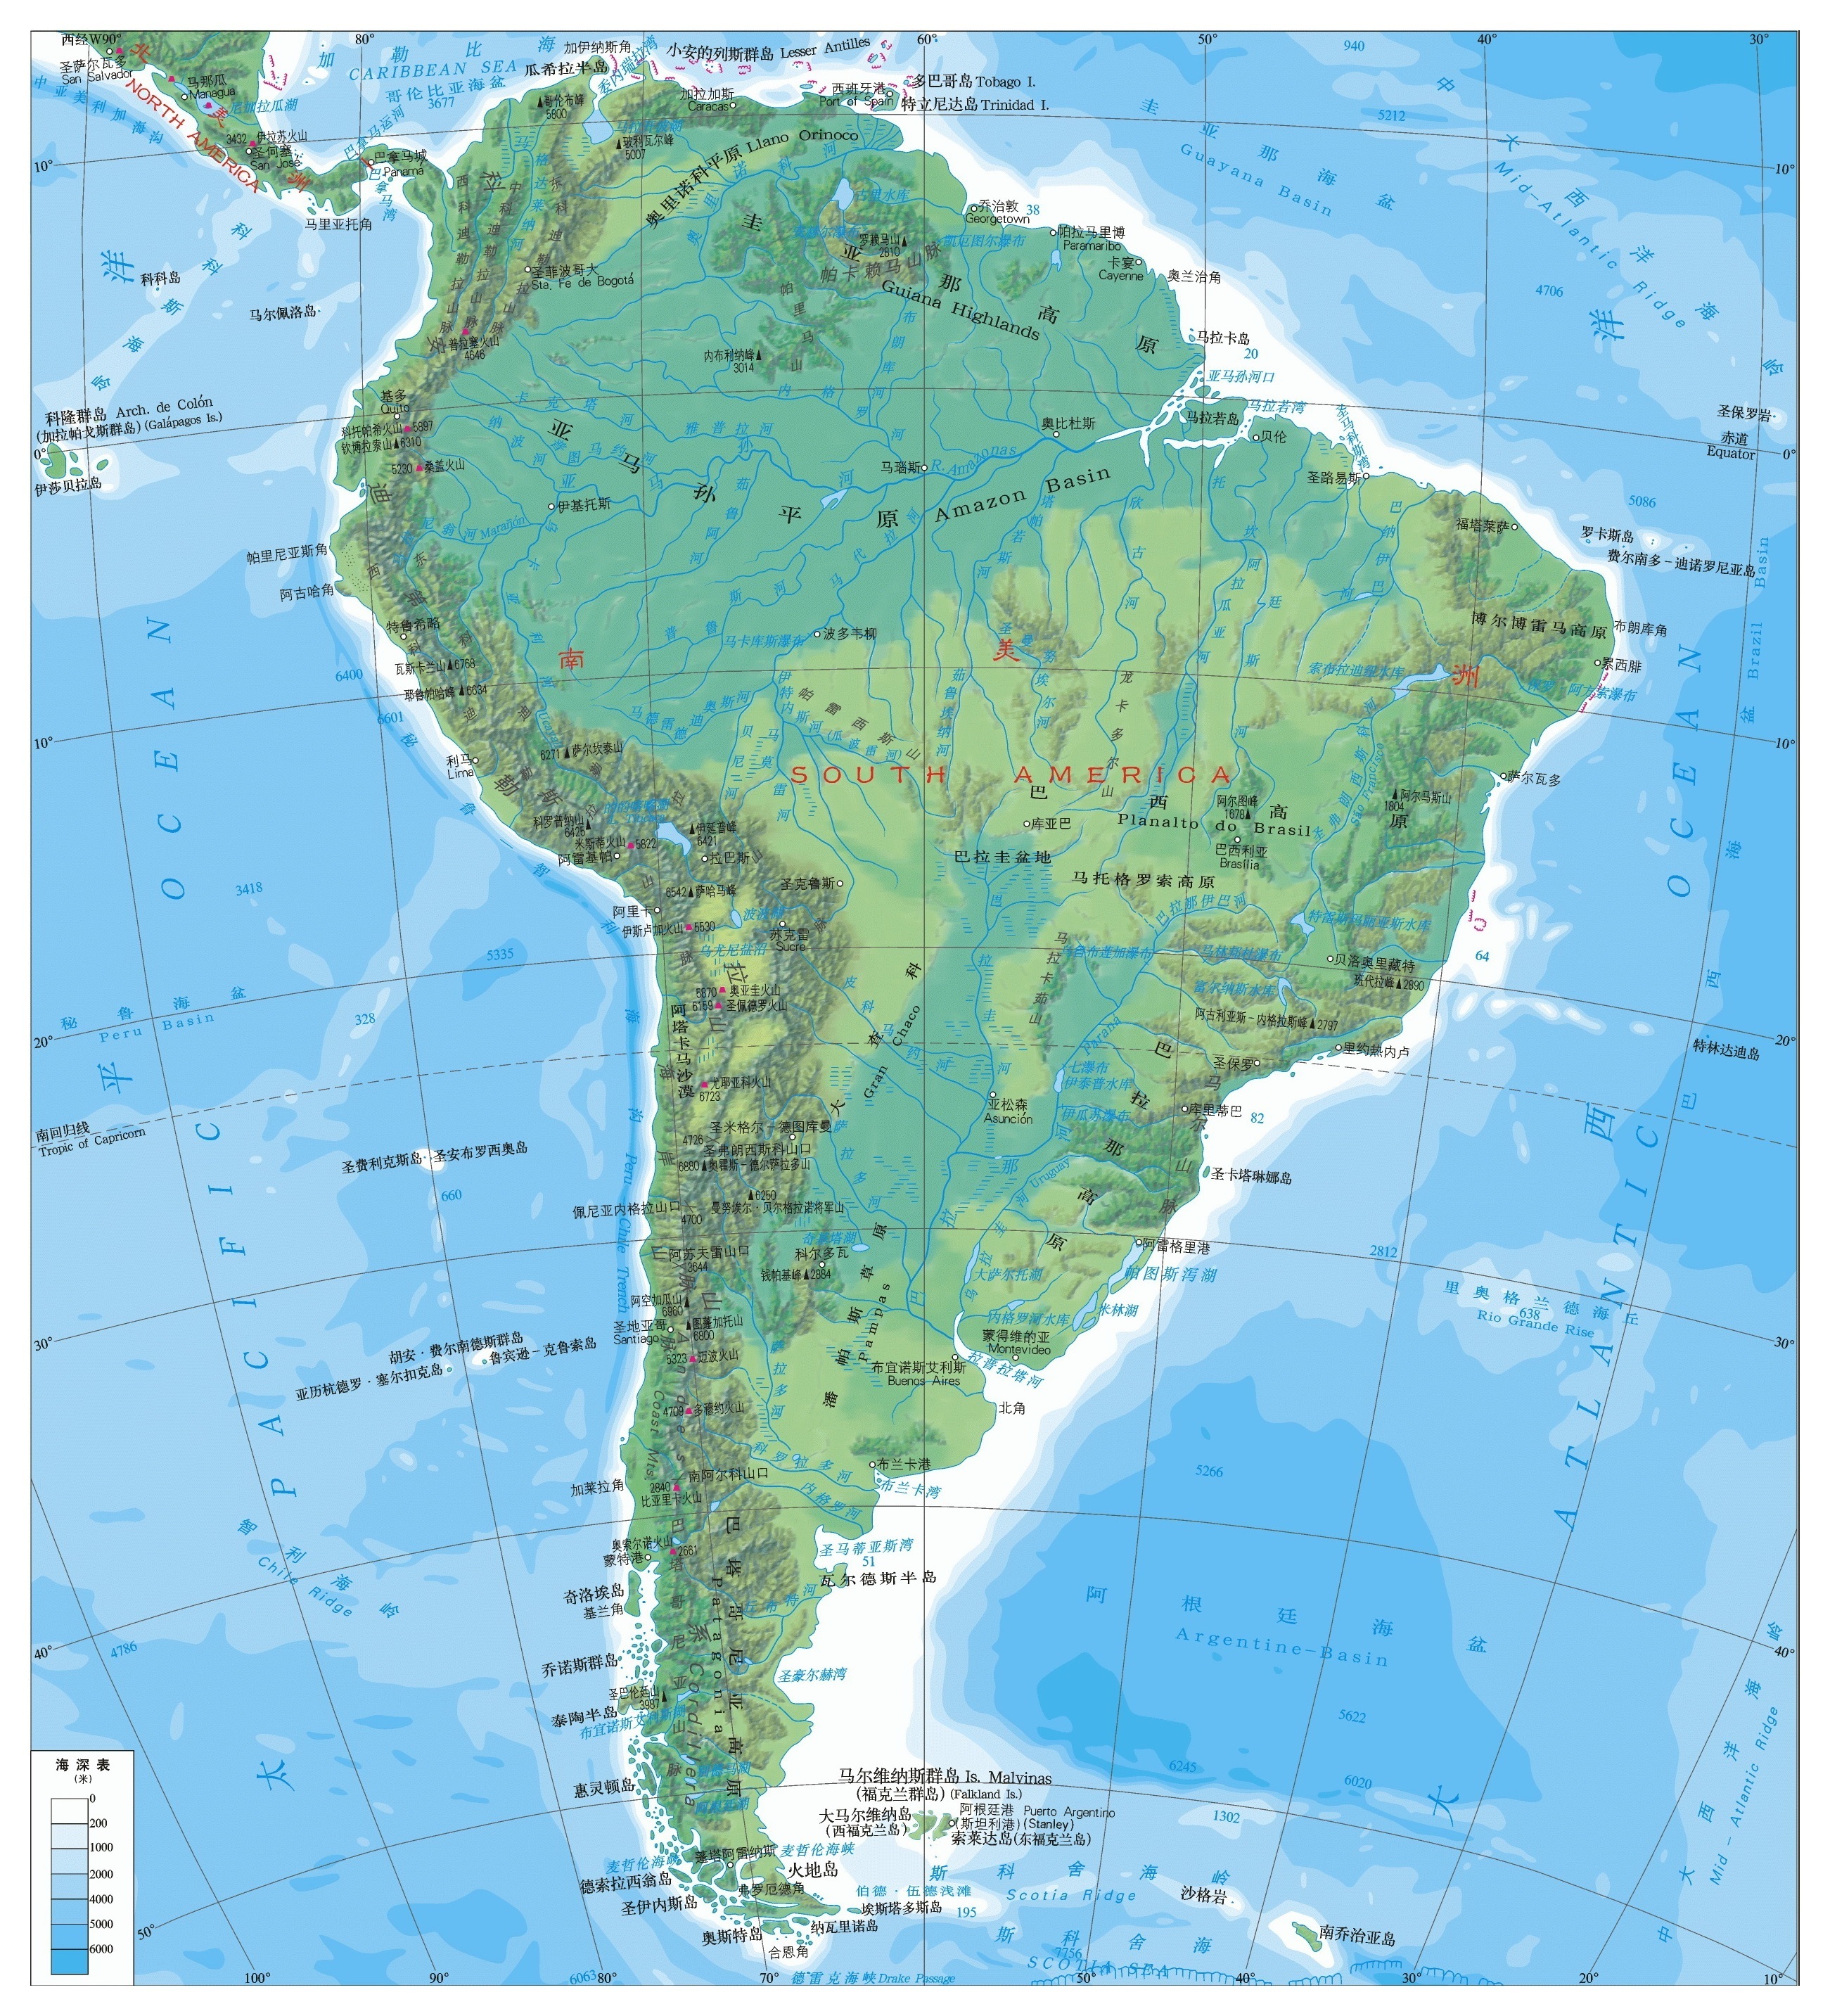 013南美洲地形.jpg